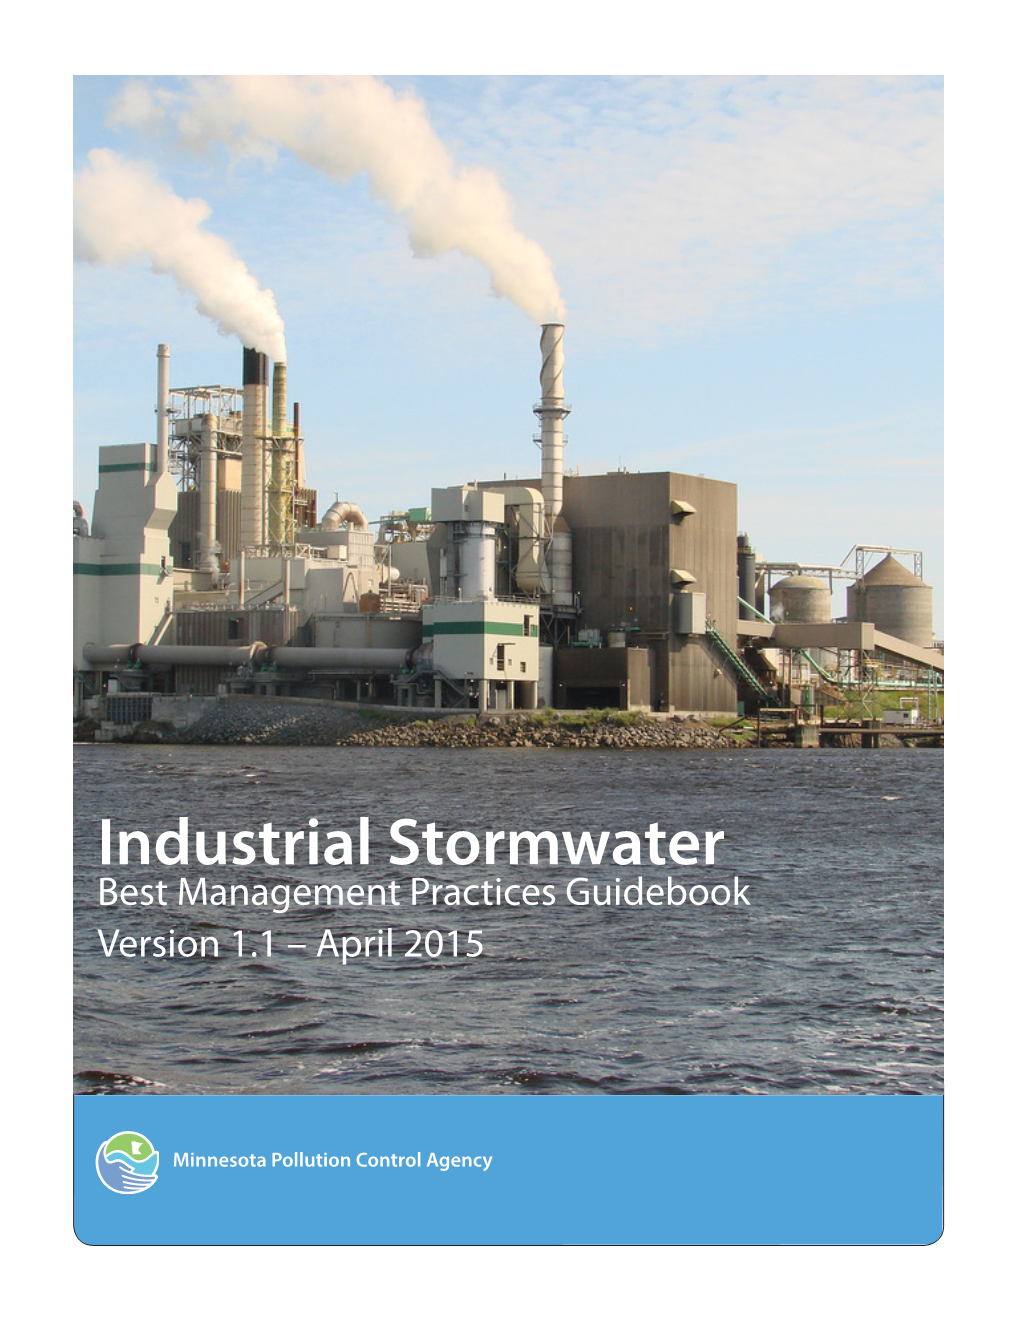 Industrial Stormwater Best Management Practices Guidebook Version 1.1 – April 2015